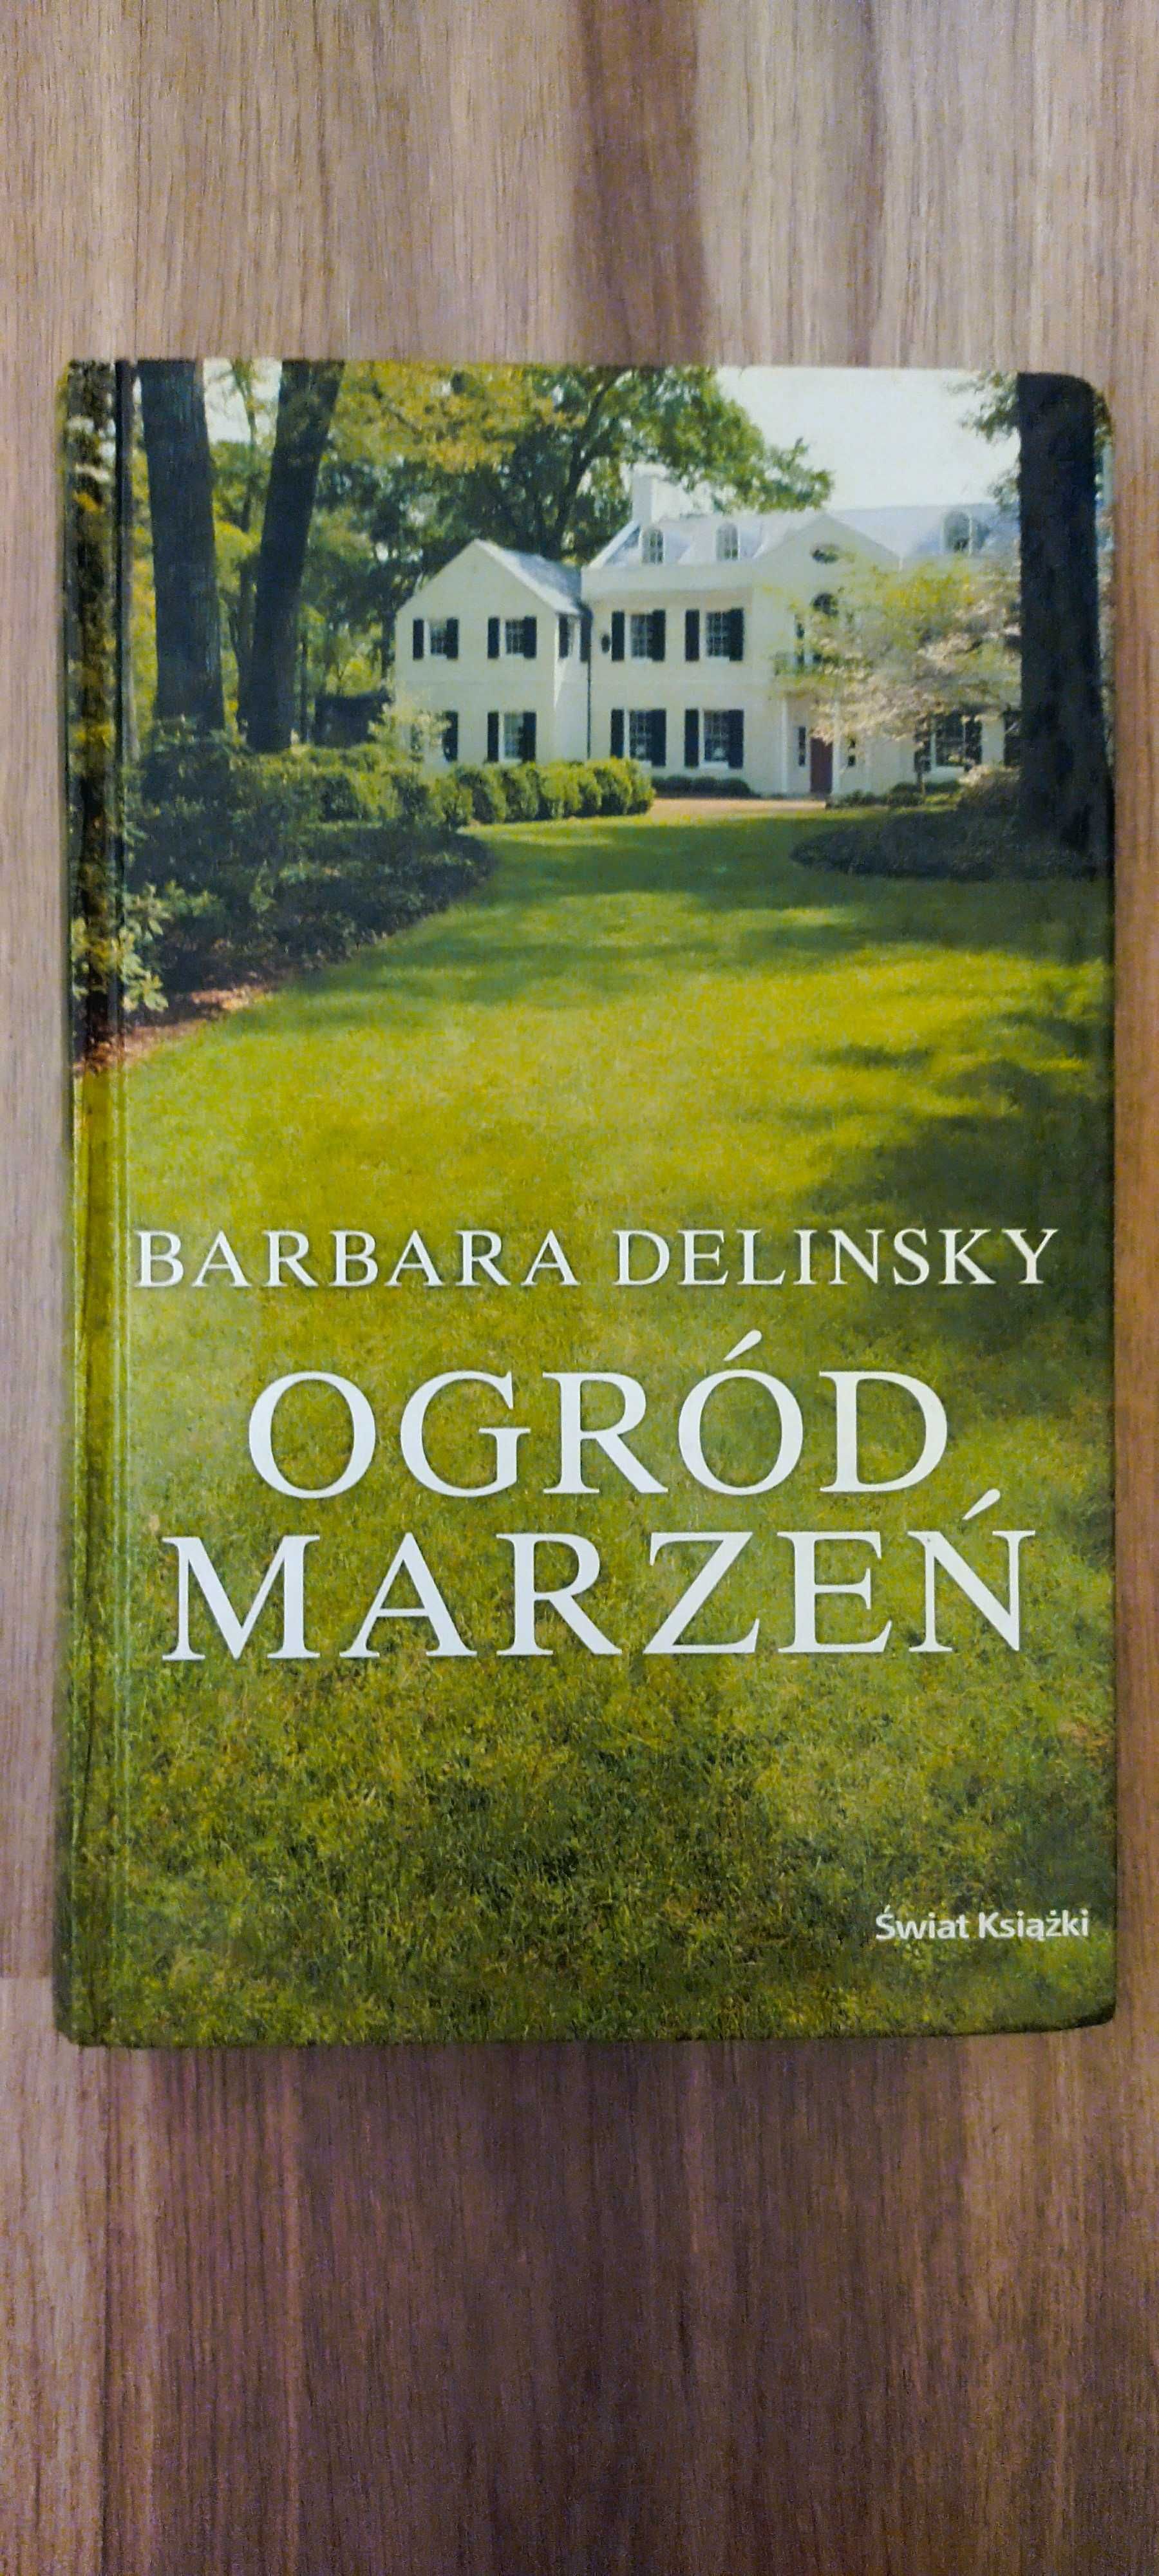 Ogród marzeń

Barbara Delinsky